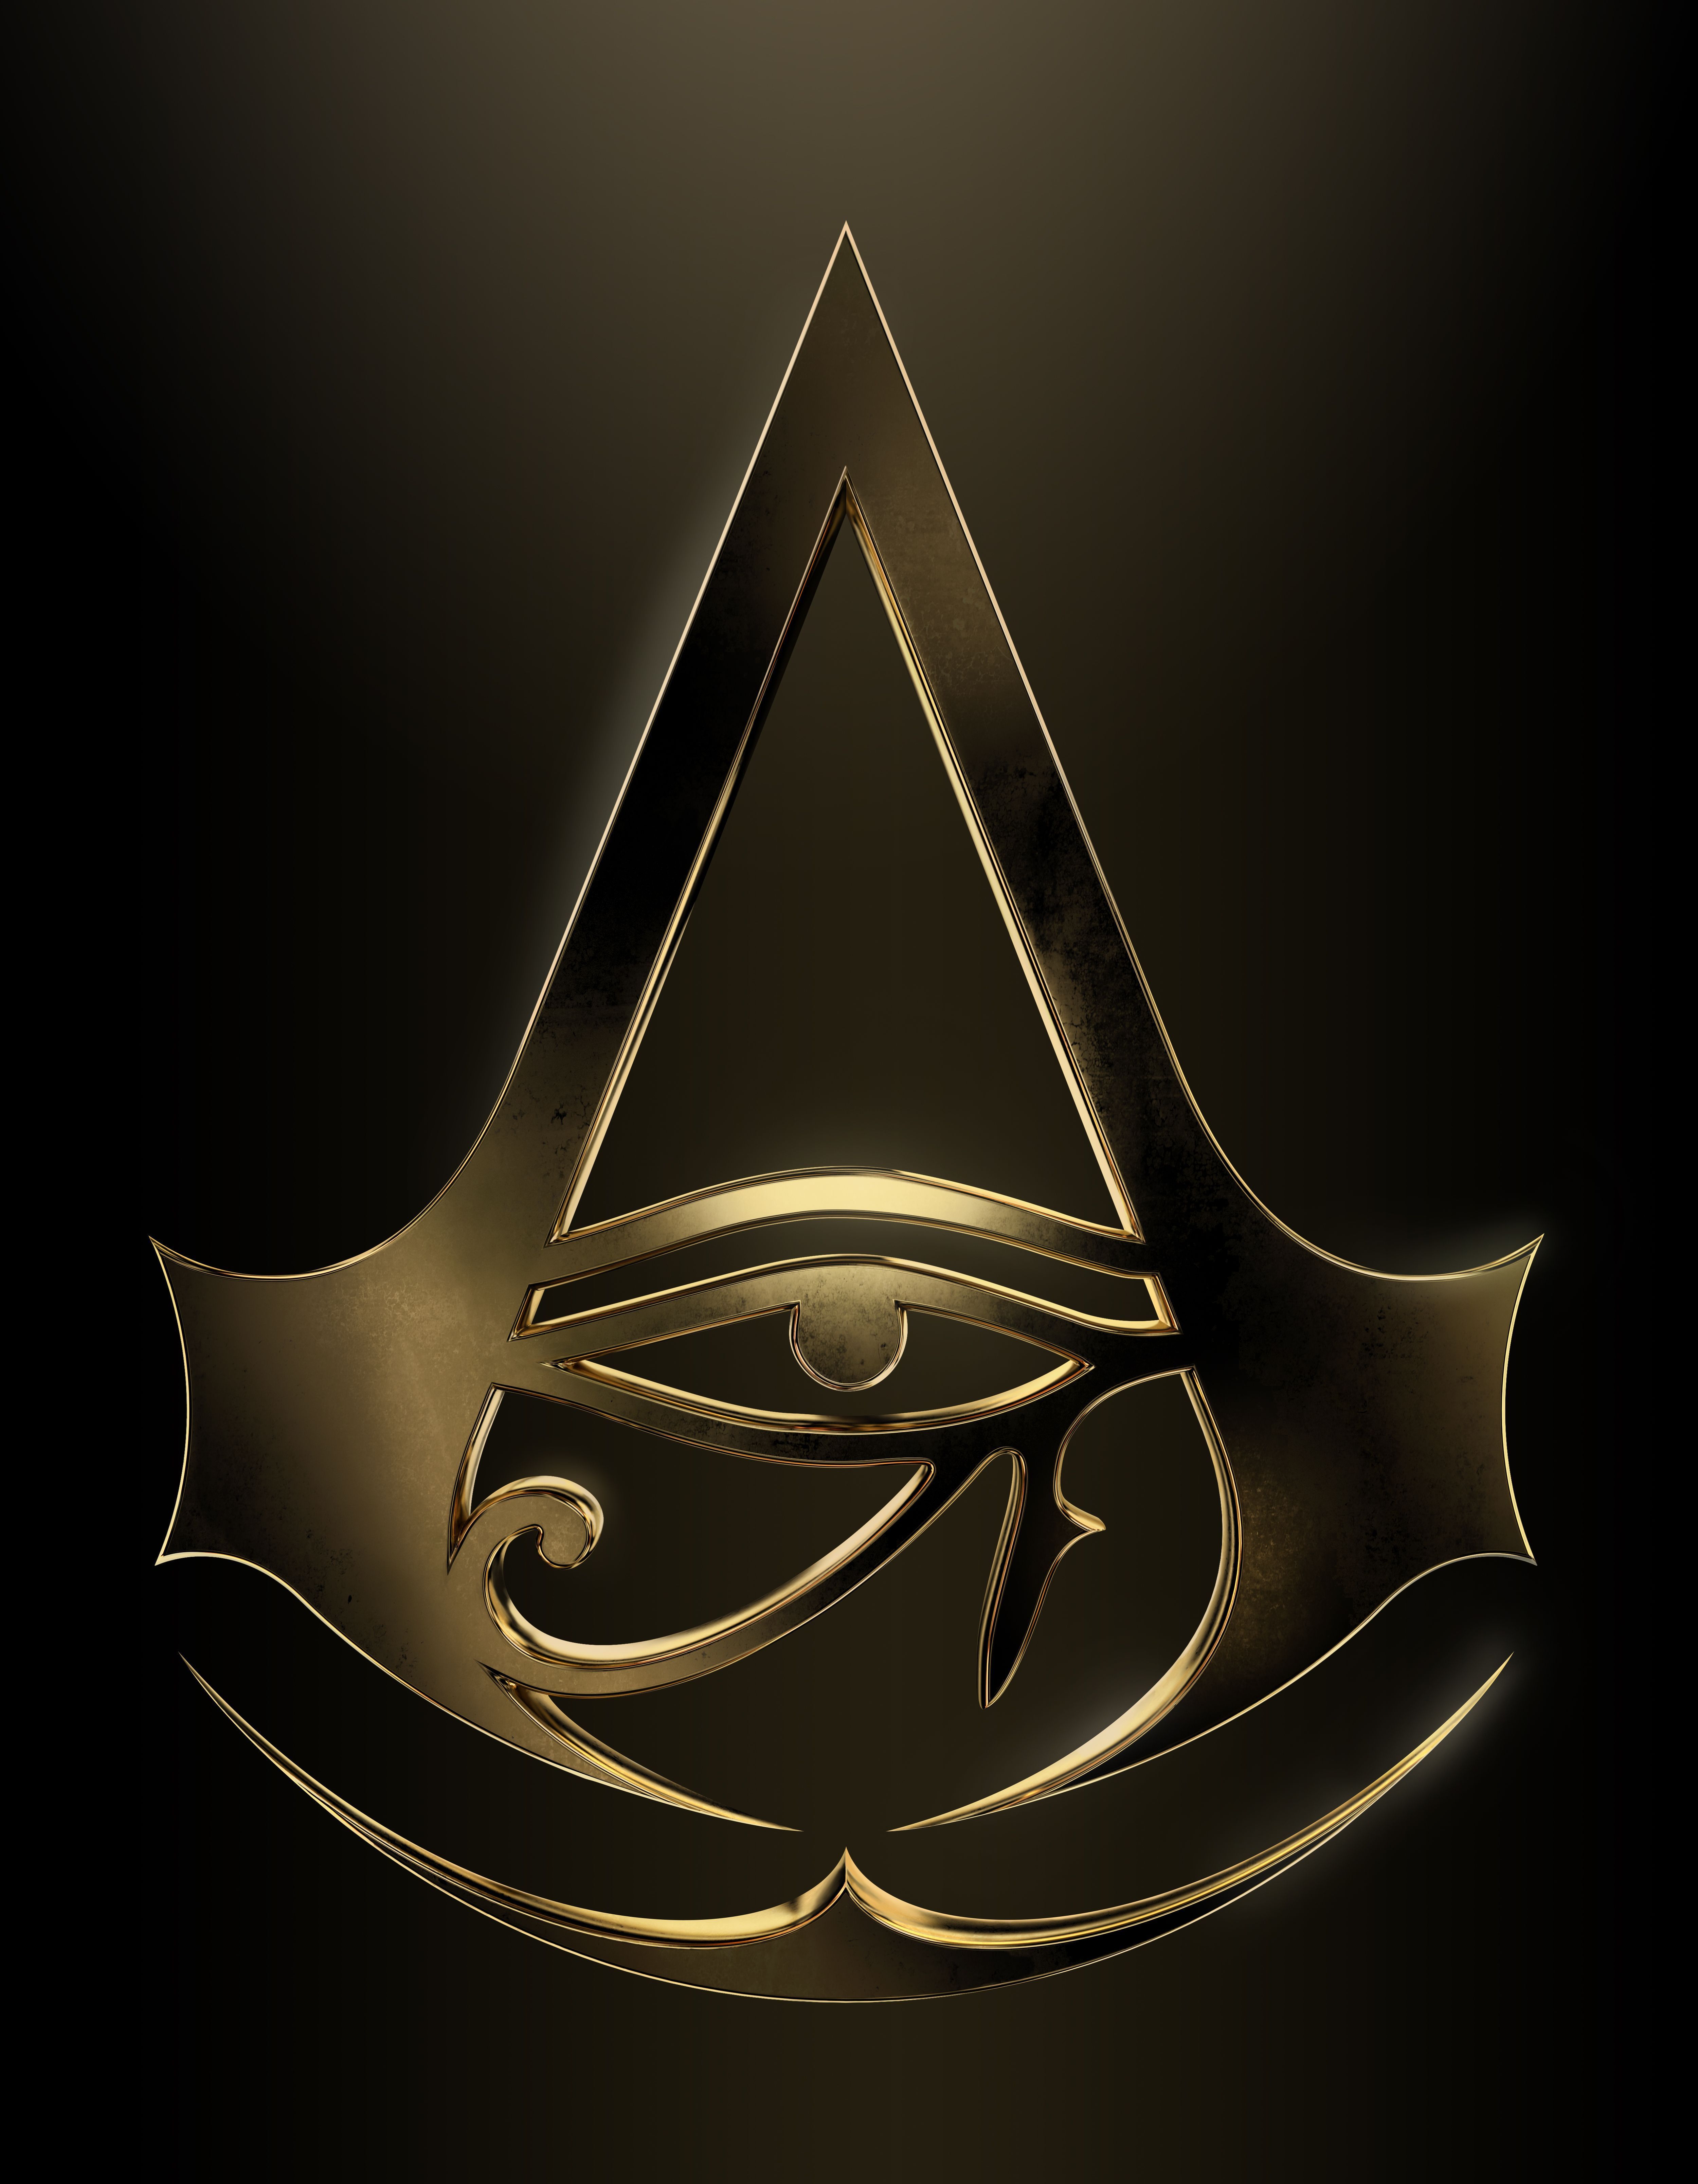 Assassin's Creed All Symbols Wallpaper at